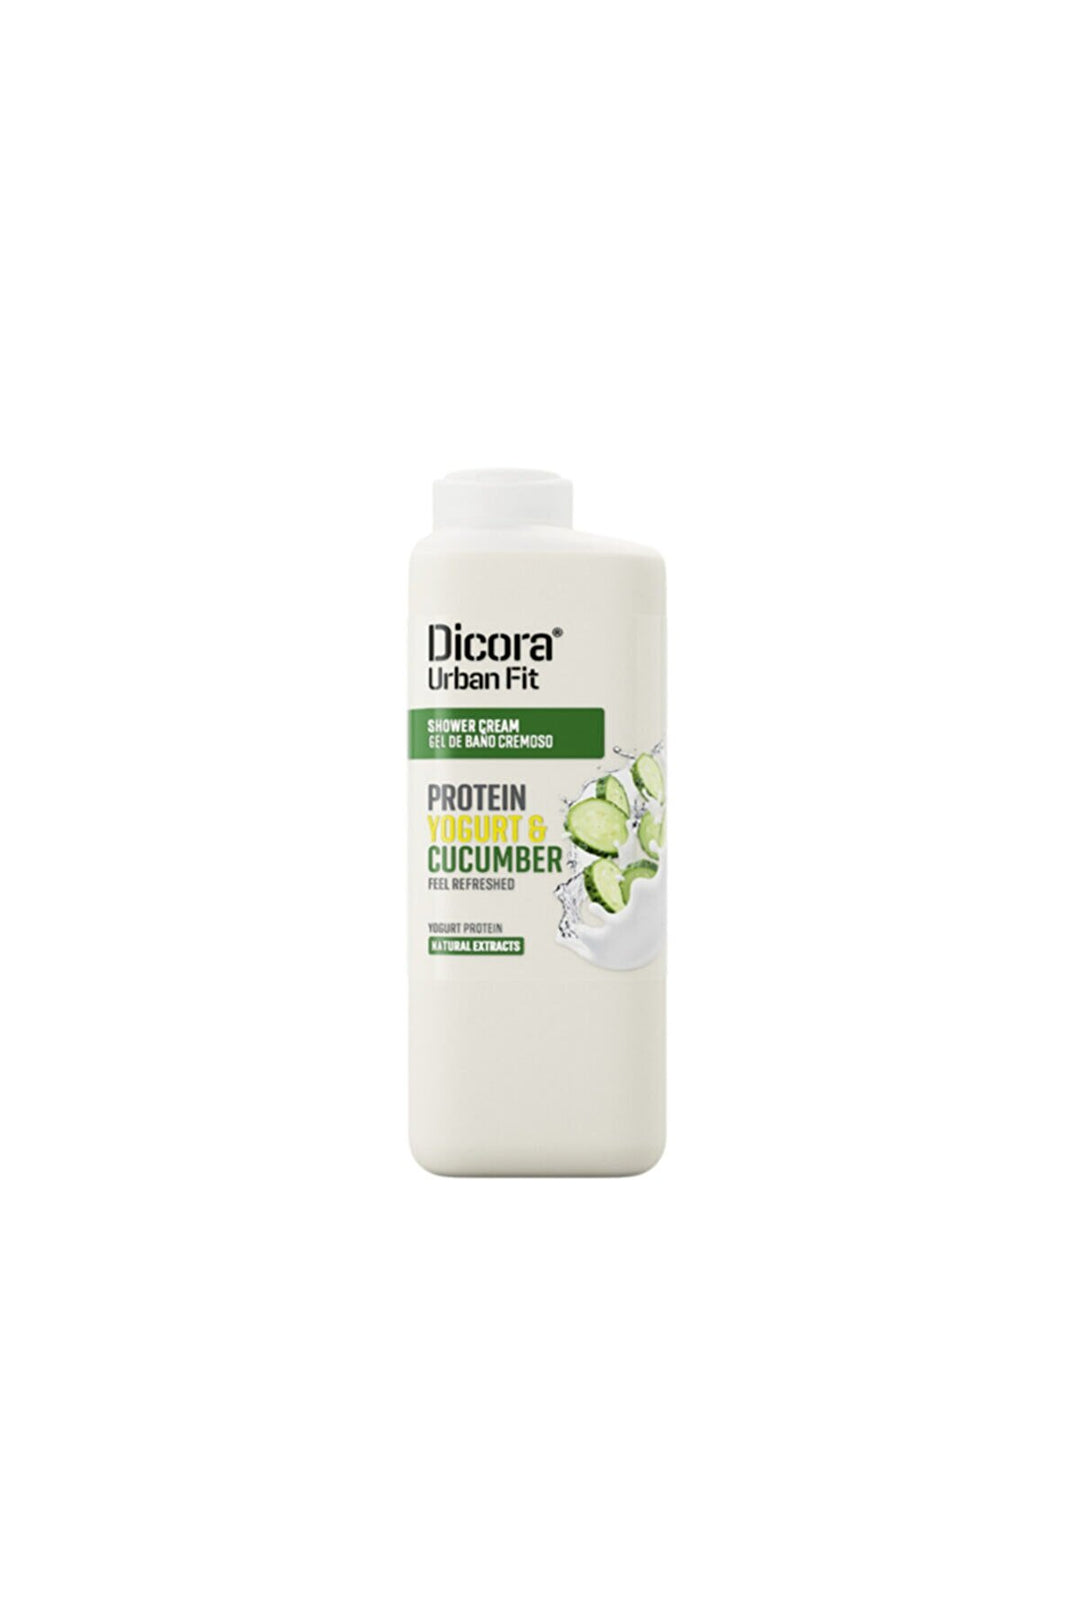 Urban Fit Protein Yogurt And Cucumber Shower Gel - 400ml |شاور جل باللبن و الخيار - 400 مل